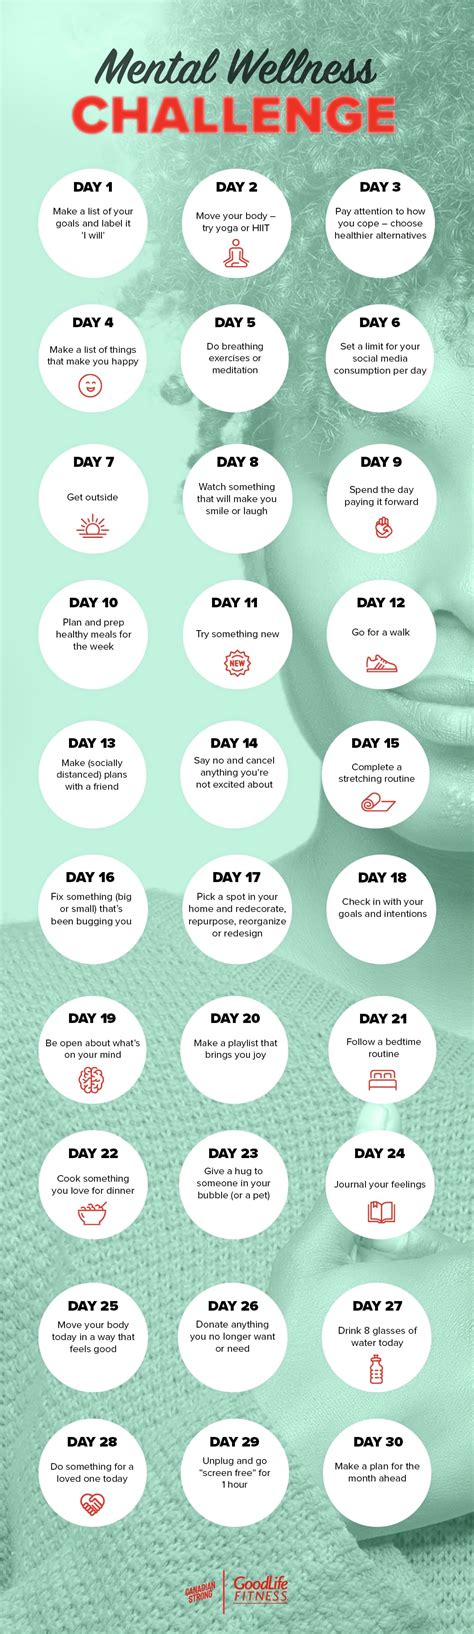 30 Day Mental Wellness Challenge The Goodlife Fitness Blog